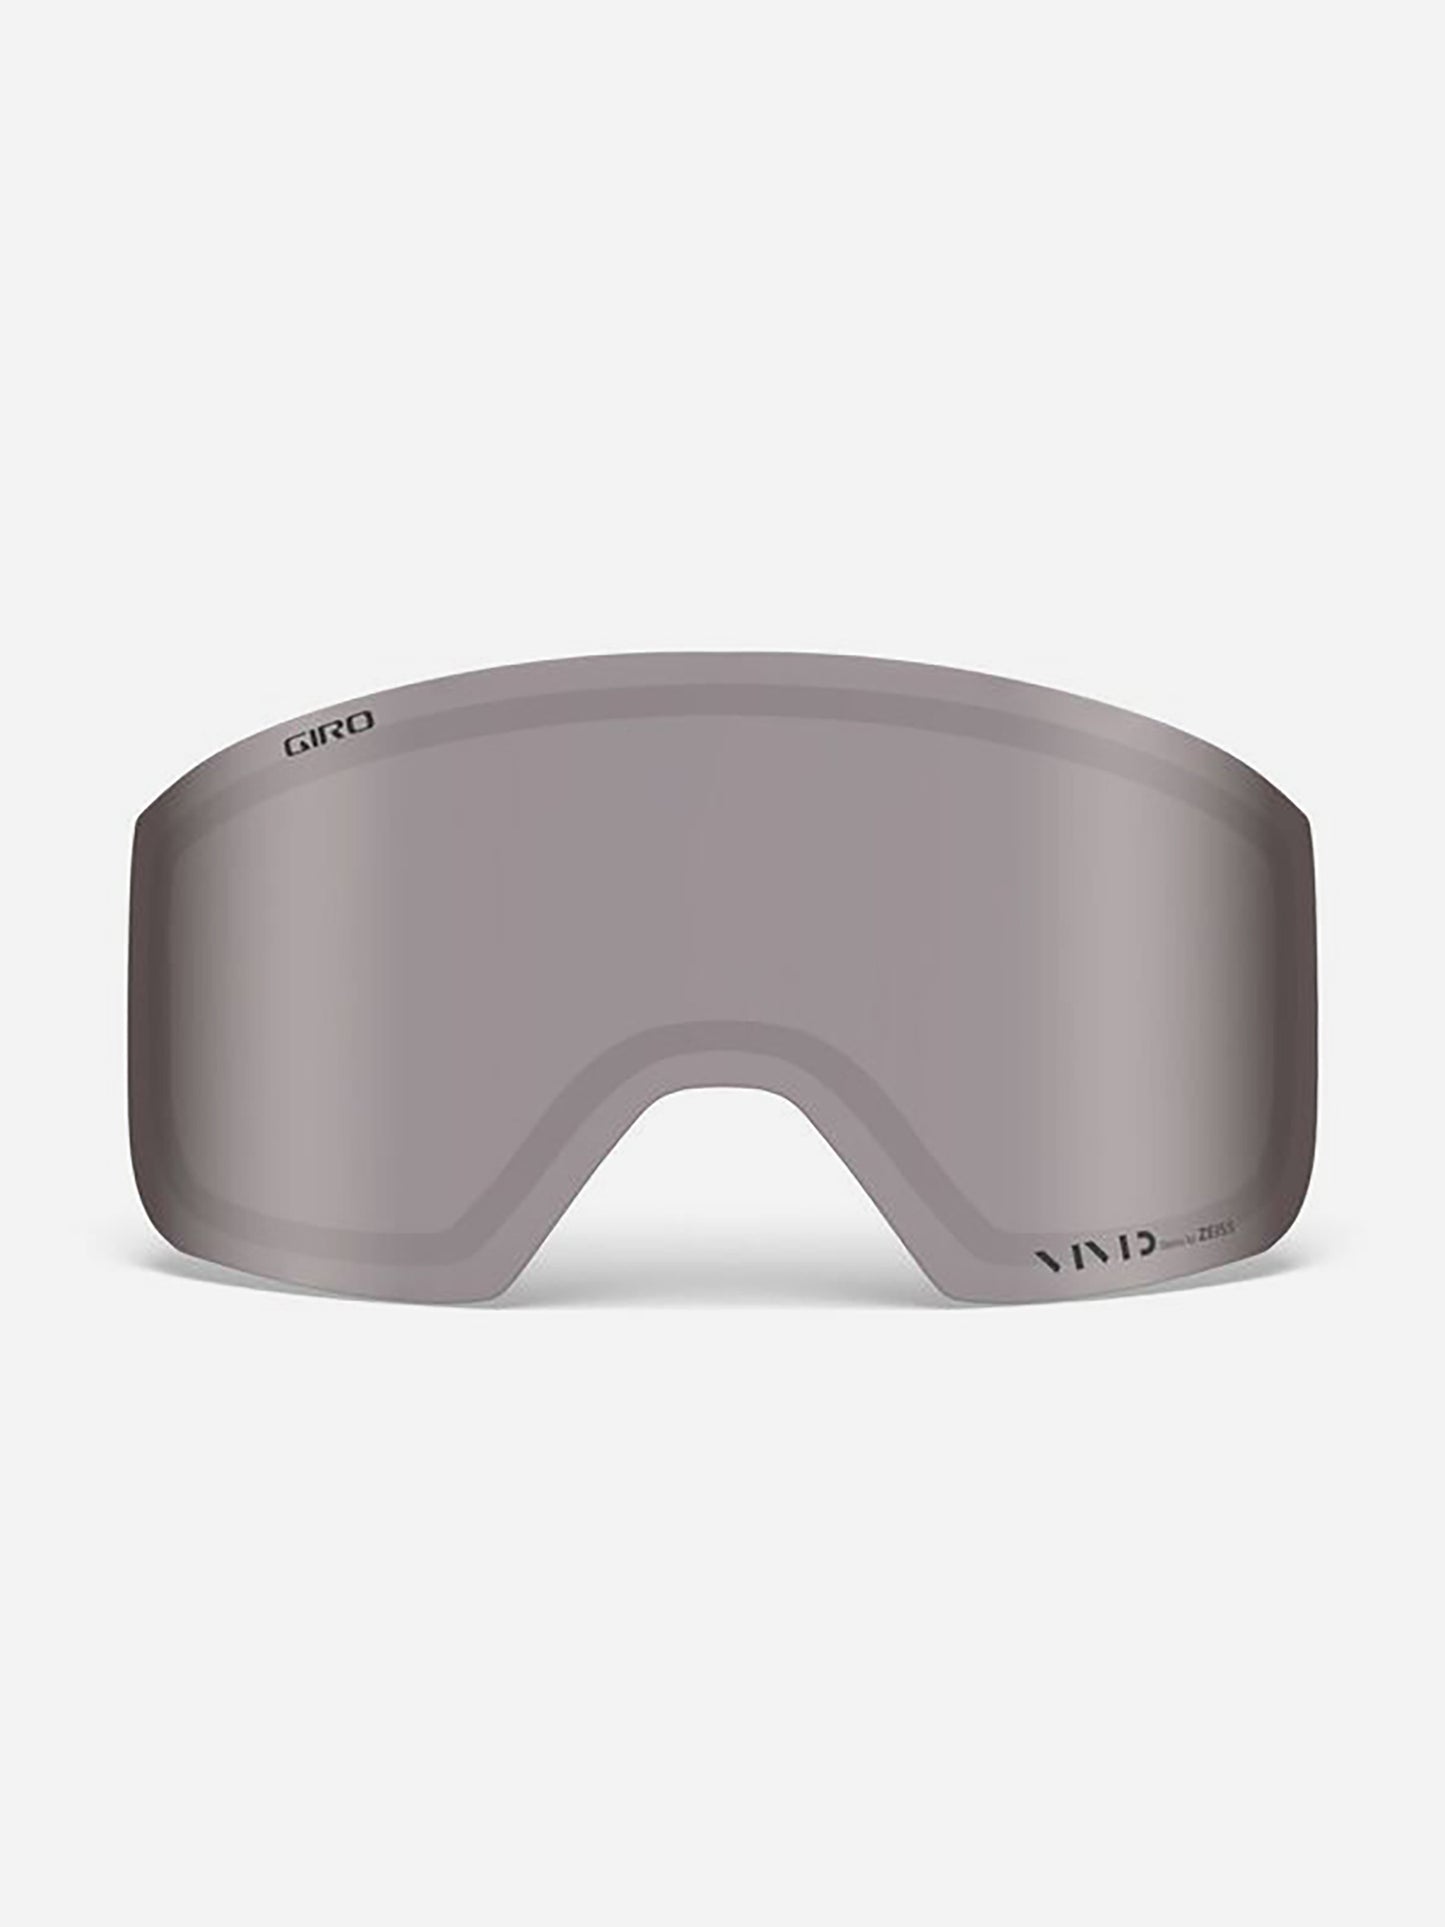 GIRO Axis/Ella Goggle Replacement Lens